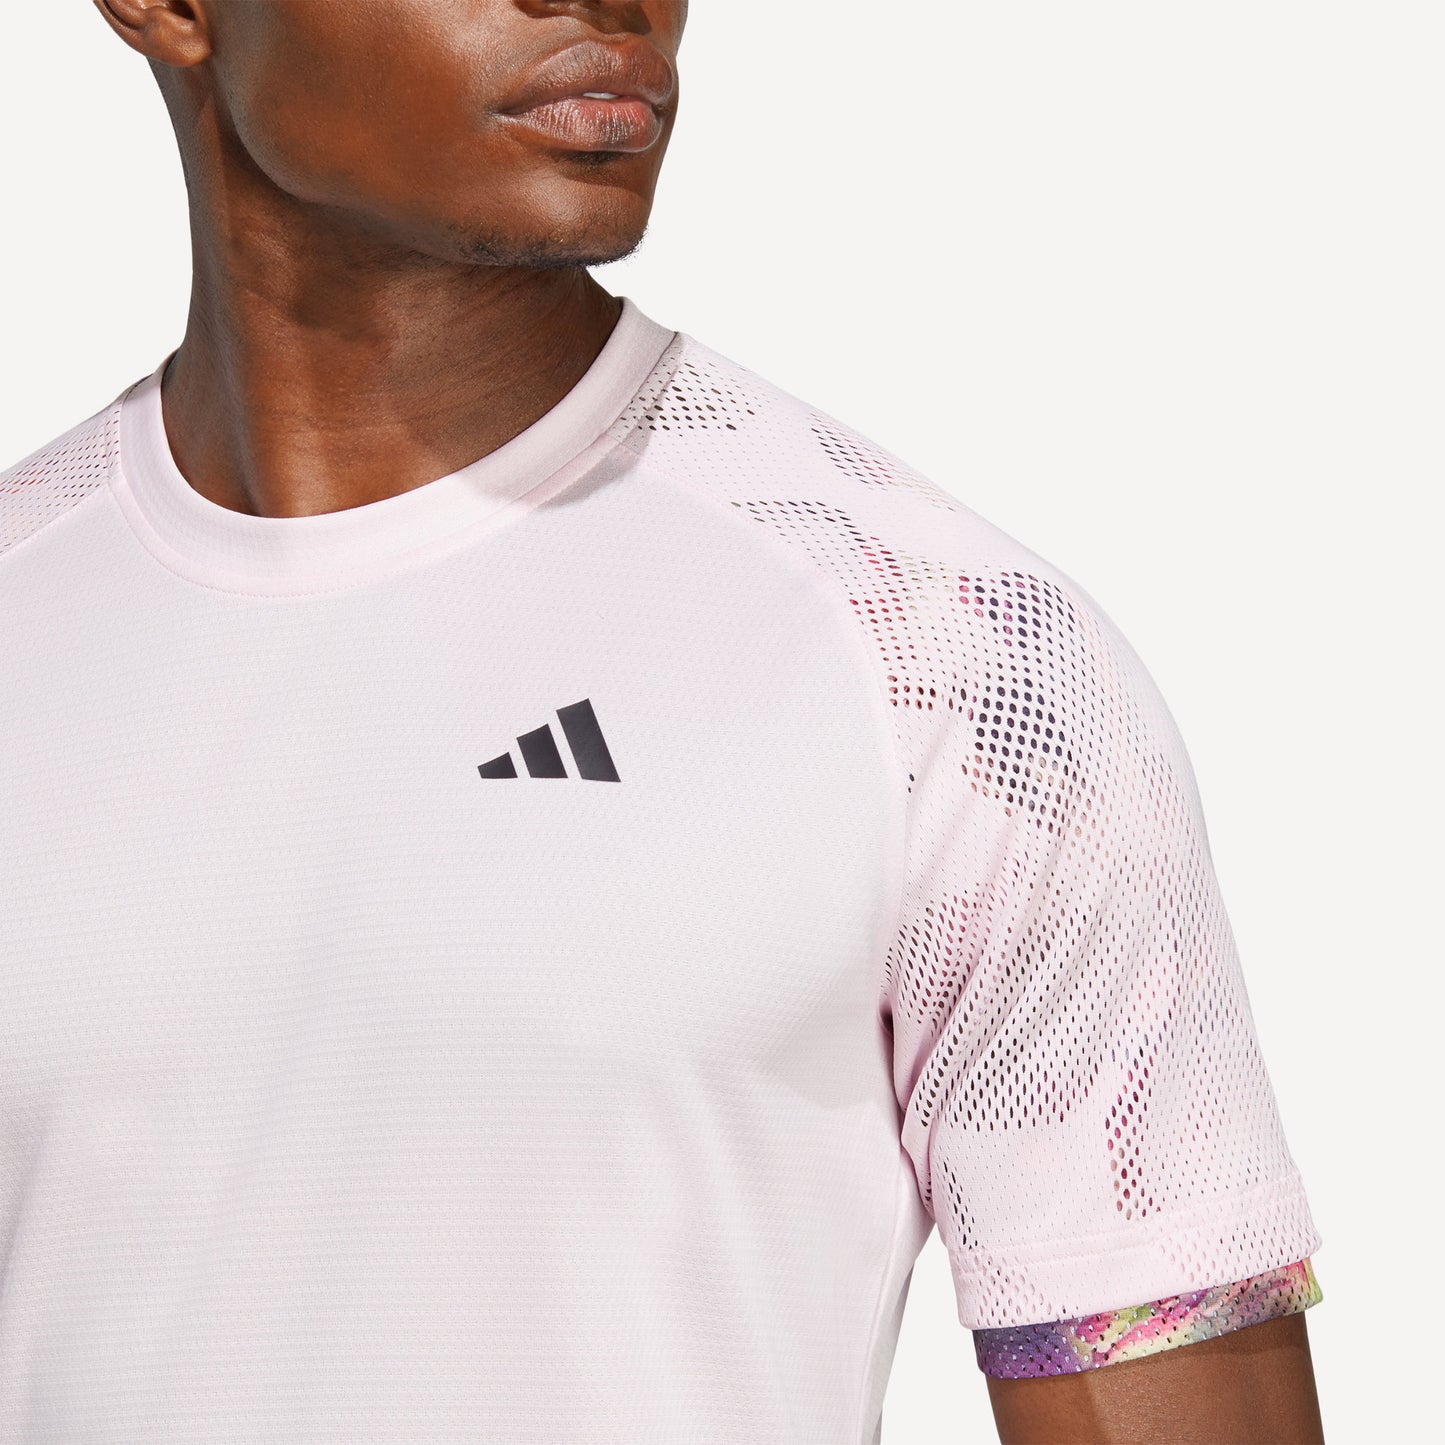 adidas Melbourne Ergo Heat Ready Men's Tennis Shirt Pink (5)